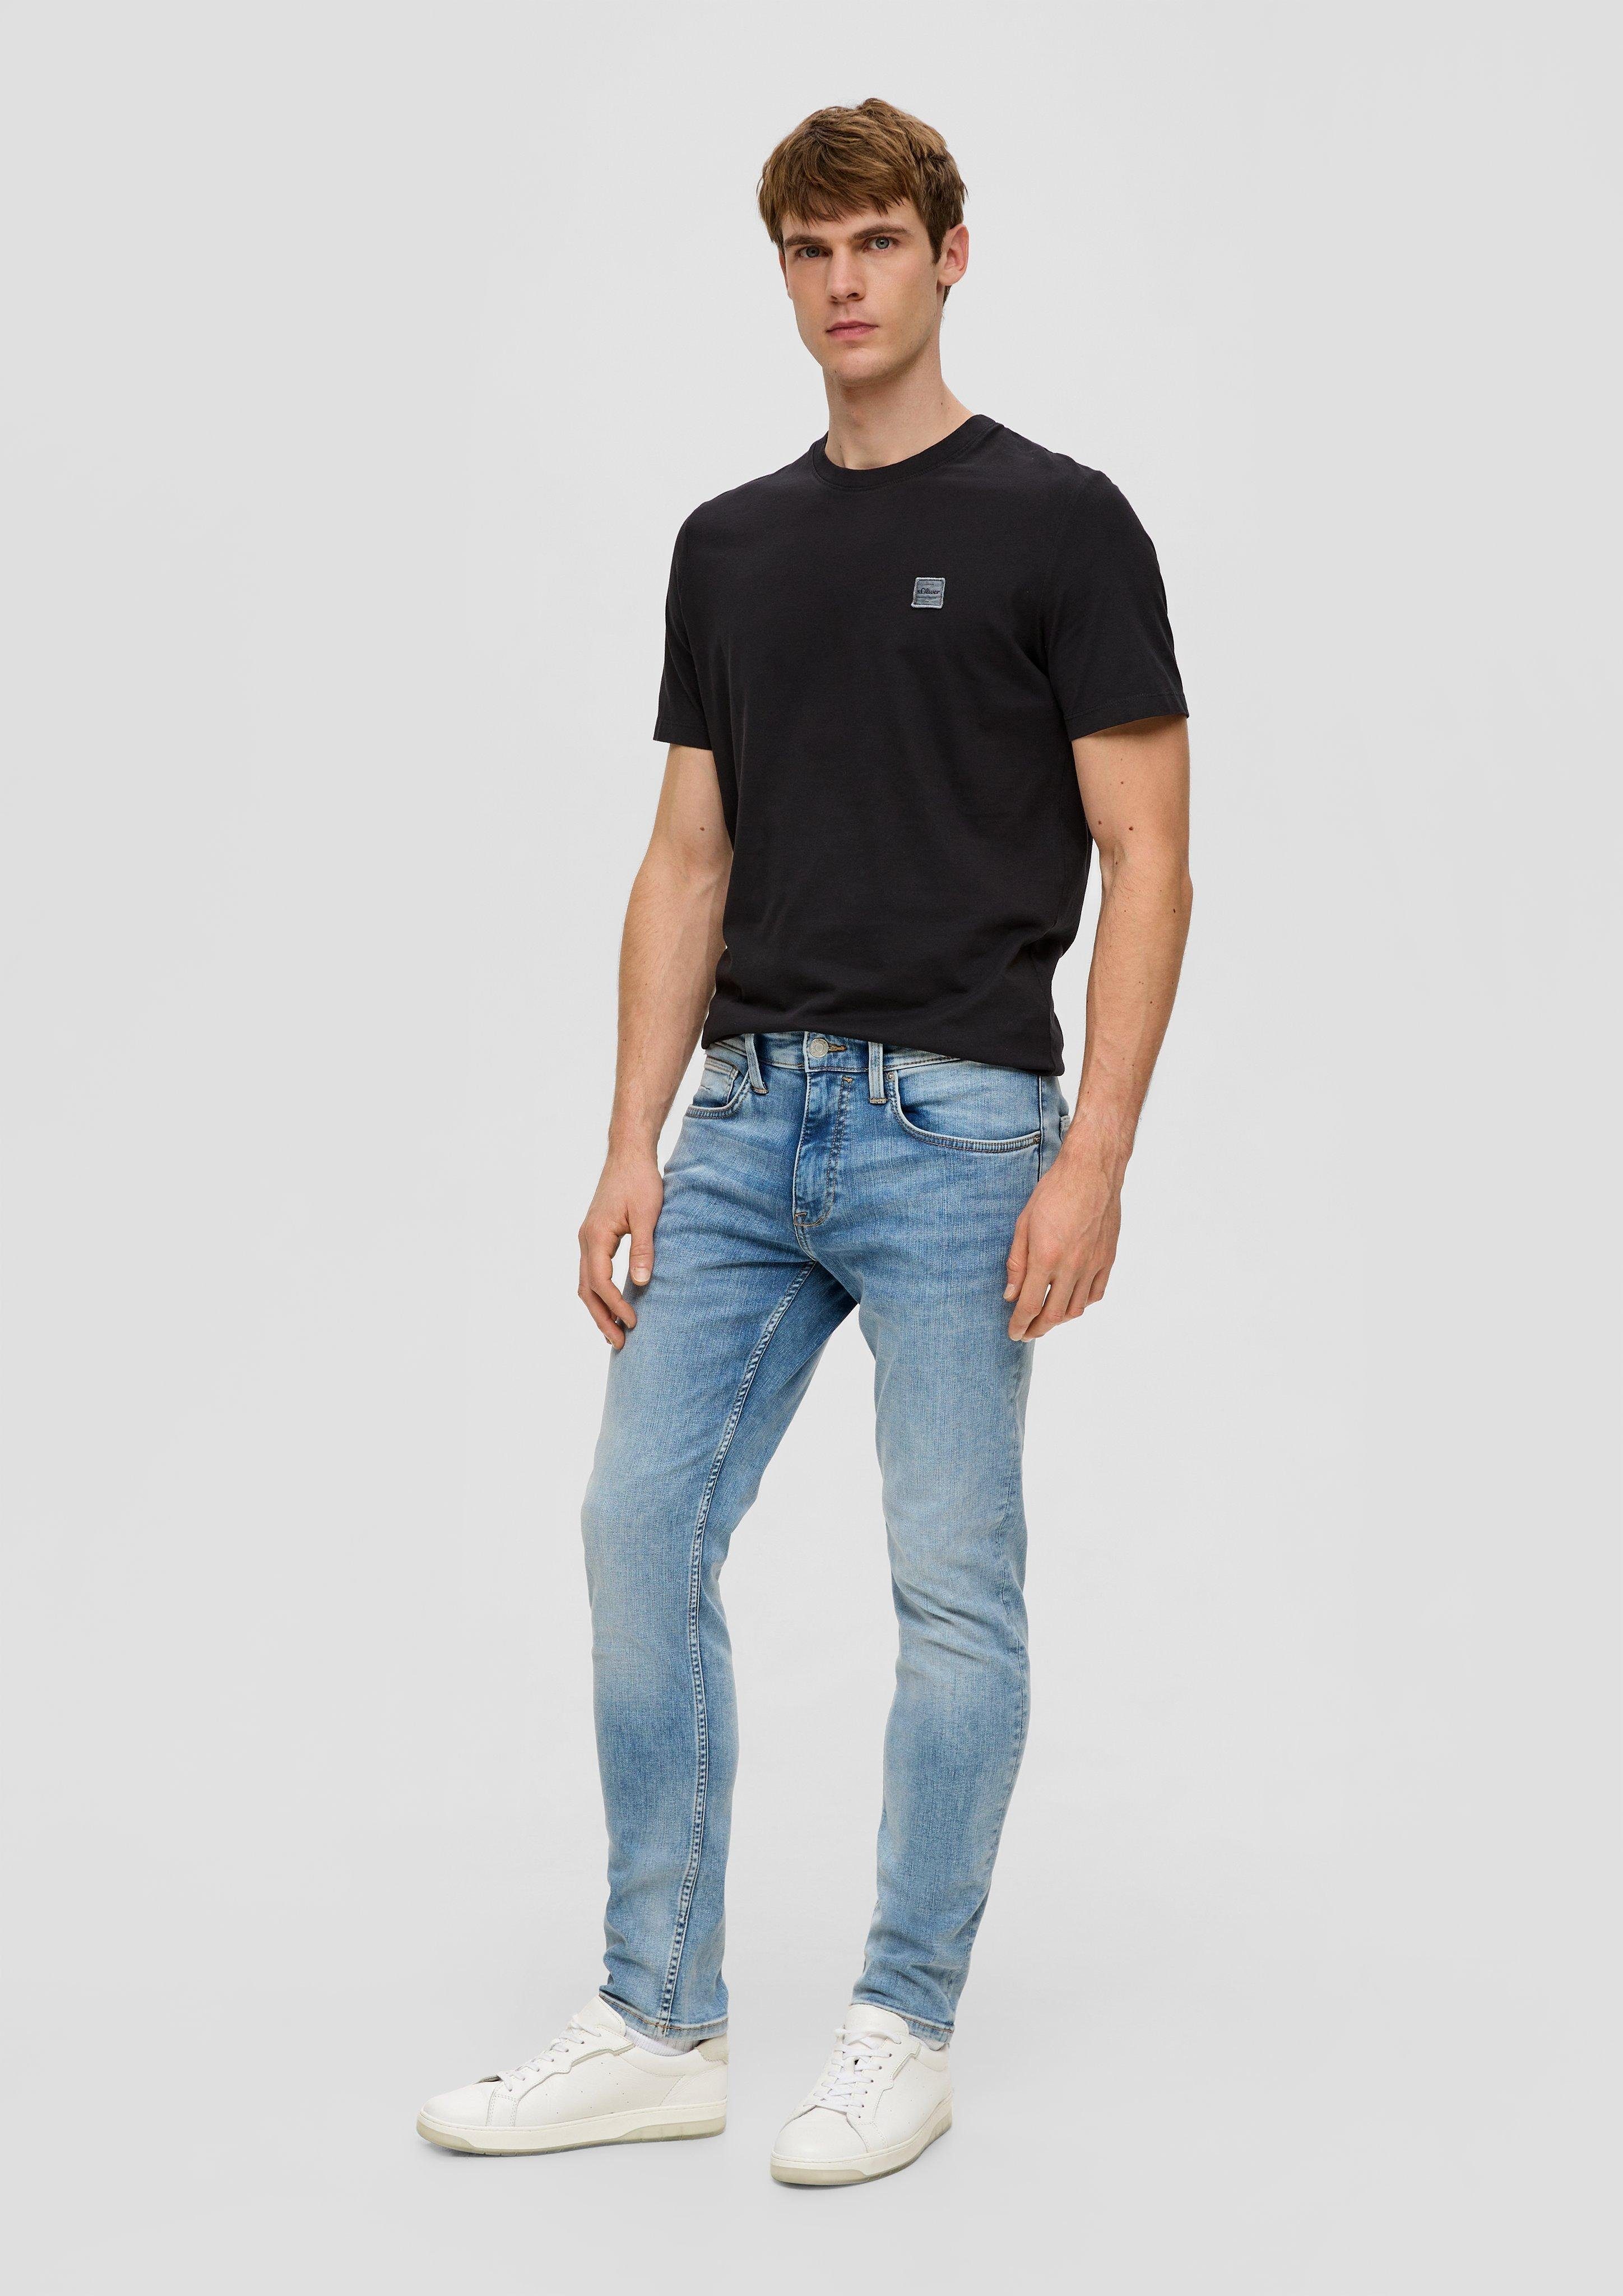 / Stoffhose Slim s.Oliver Jeans Mid Fit Slim Rise Leg / /